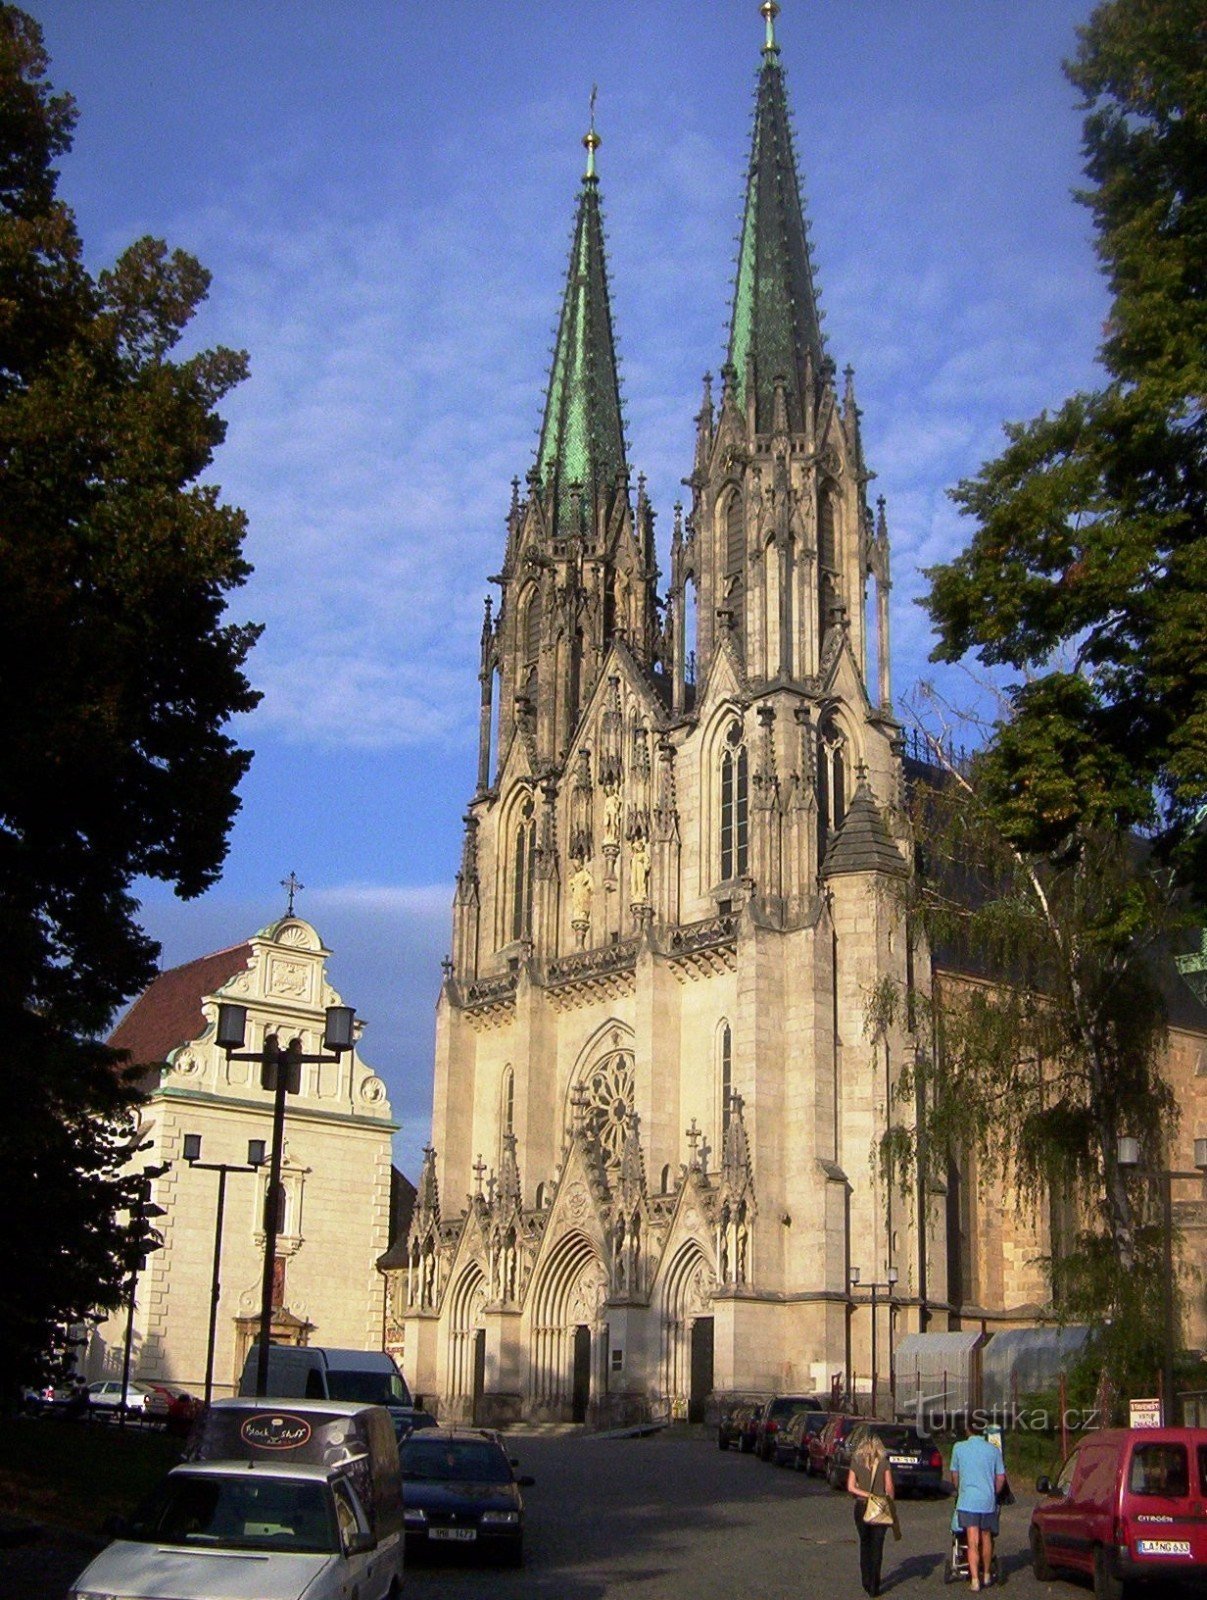 Olomouc - Place Venceslas - Cathédrale Saint-Venceslas - Photo : Ulrych Mir.